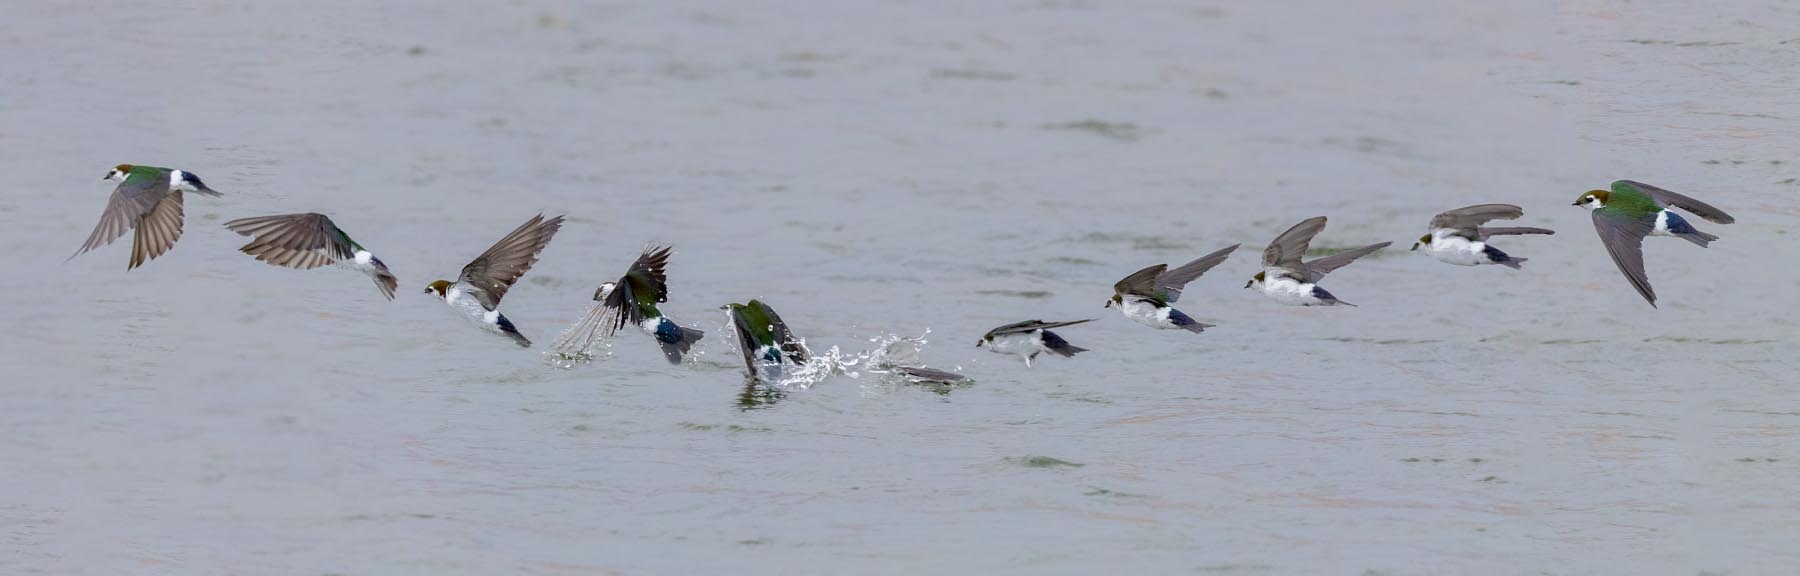 Violet-green Swallow dive